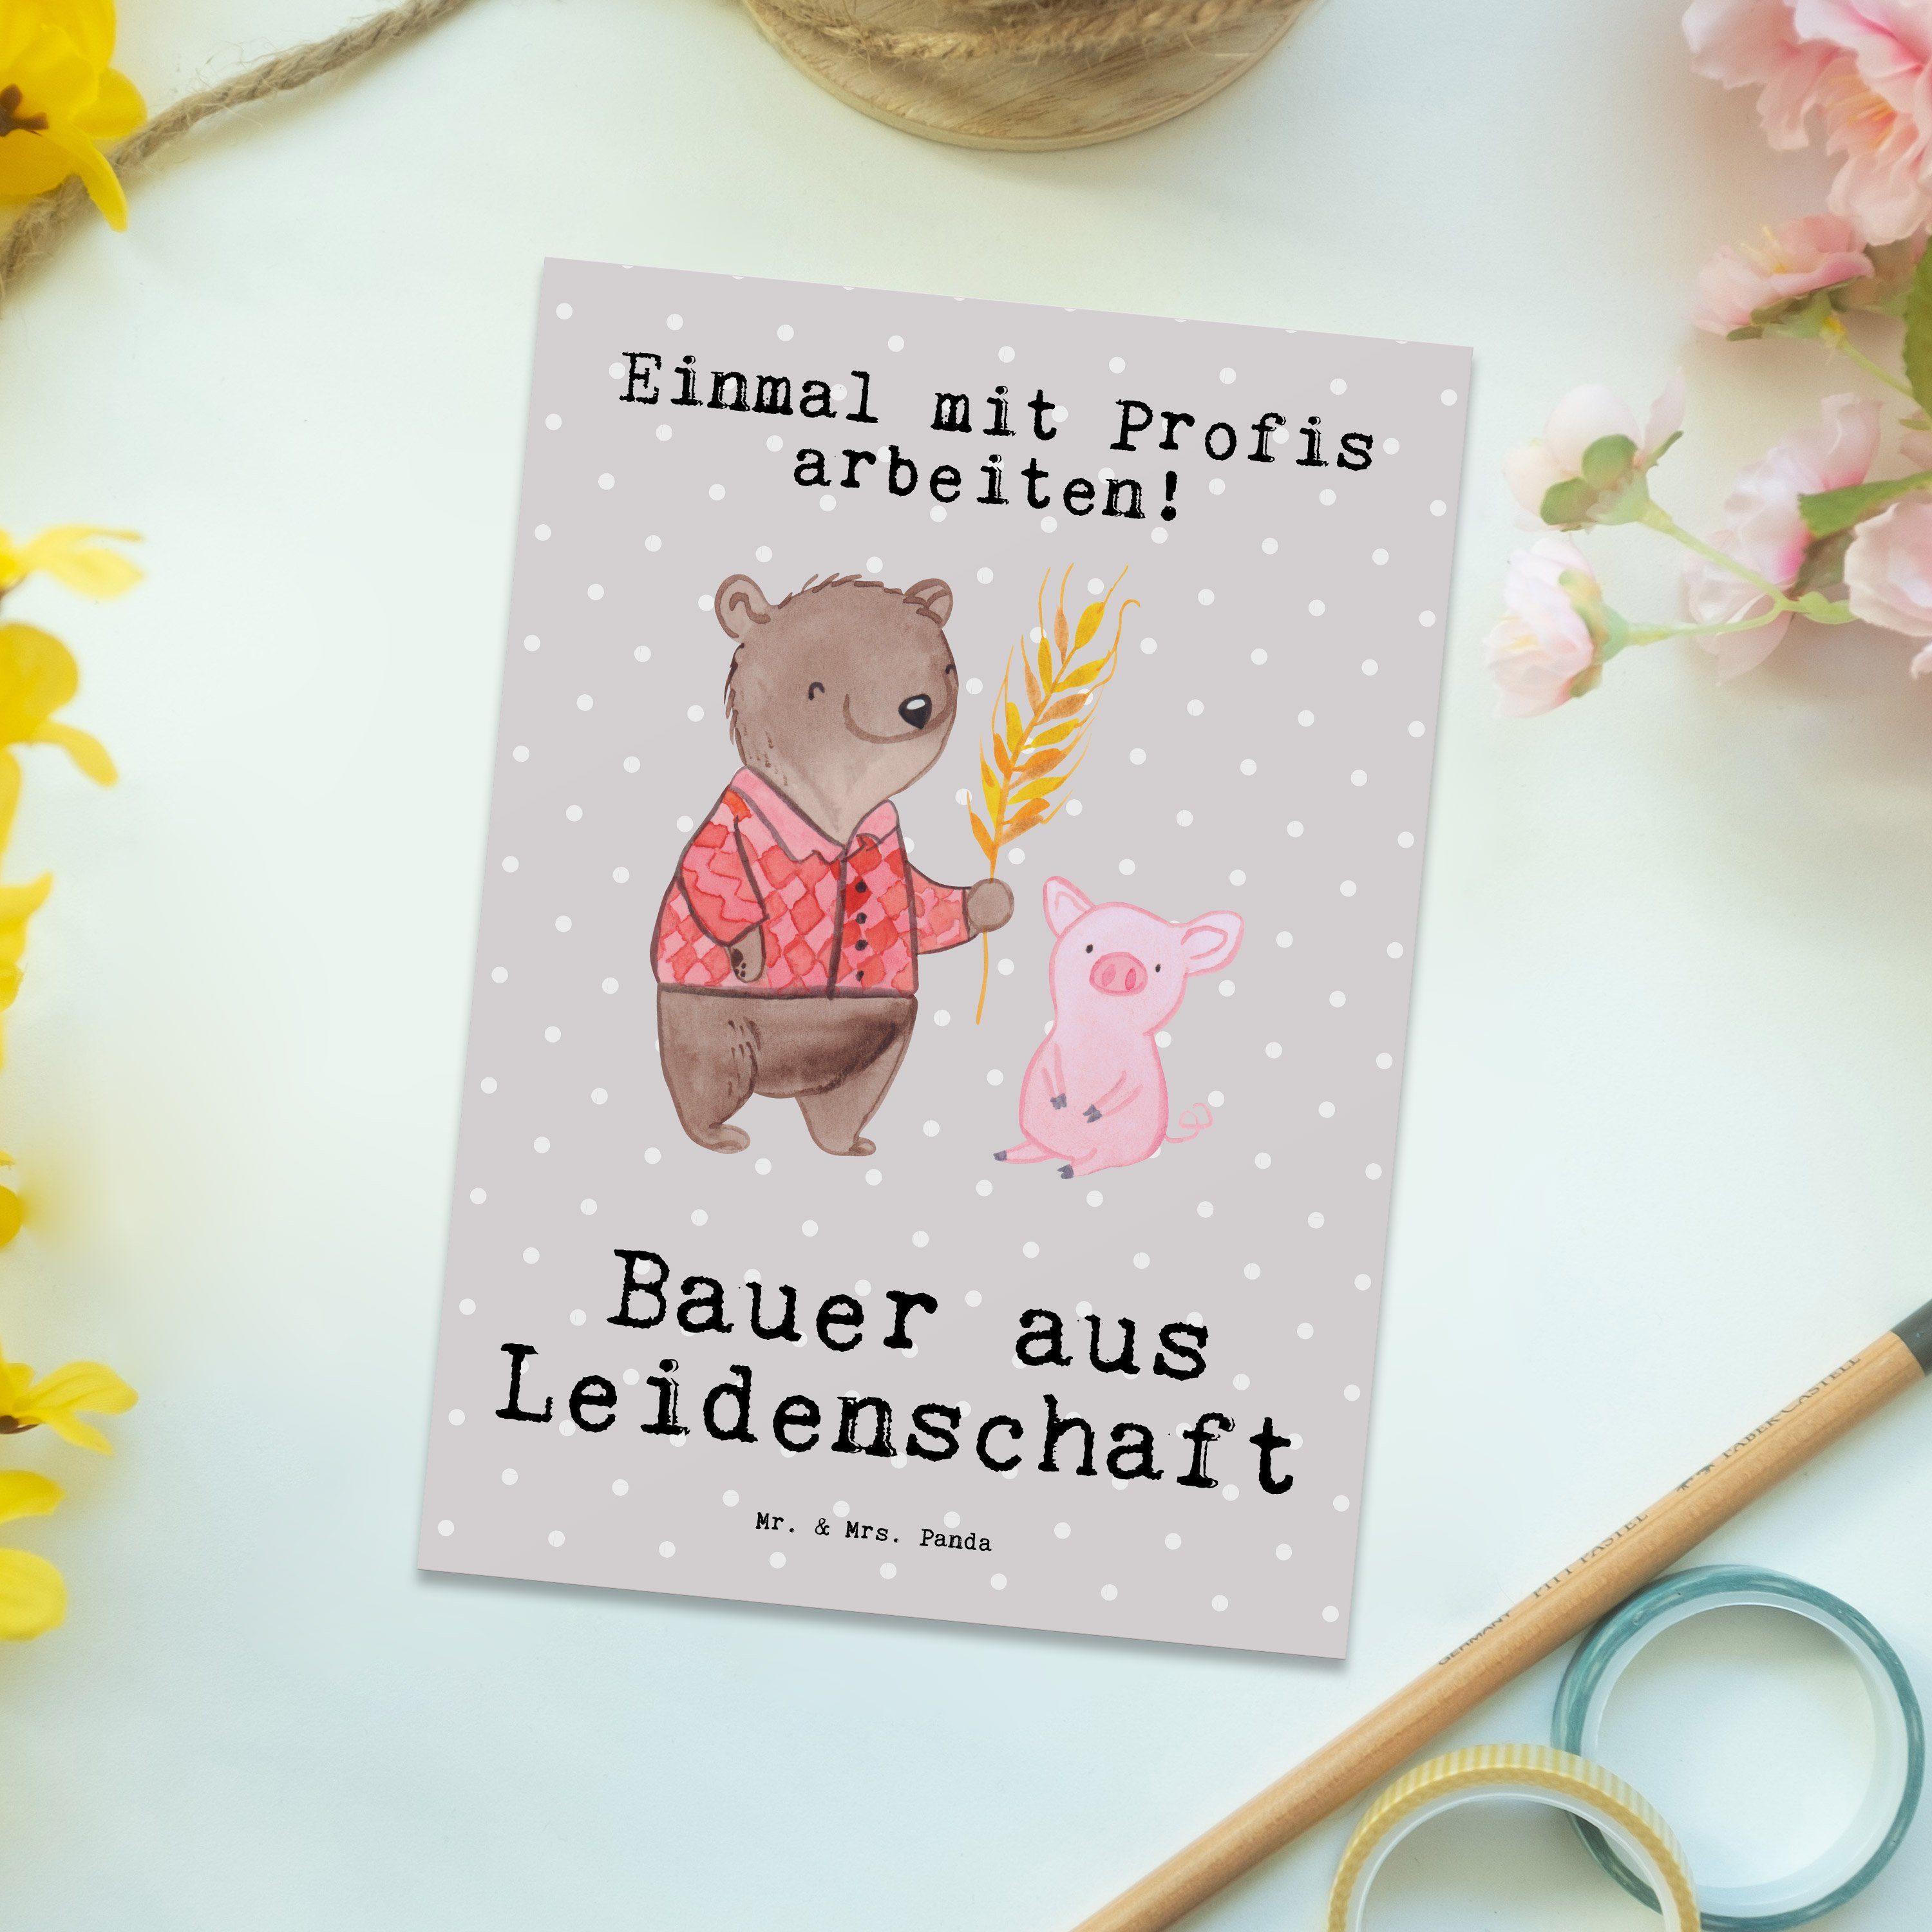 Abschie aus - Dankeschön, Mrs. Bauer Leidenschaft Pastell Panda - Postkarte Grau Geschenk, & Mr.